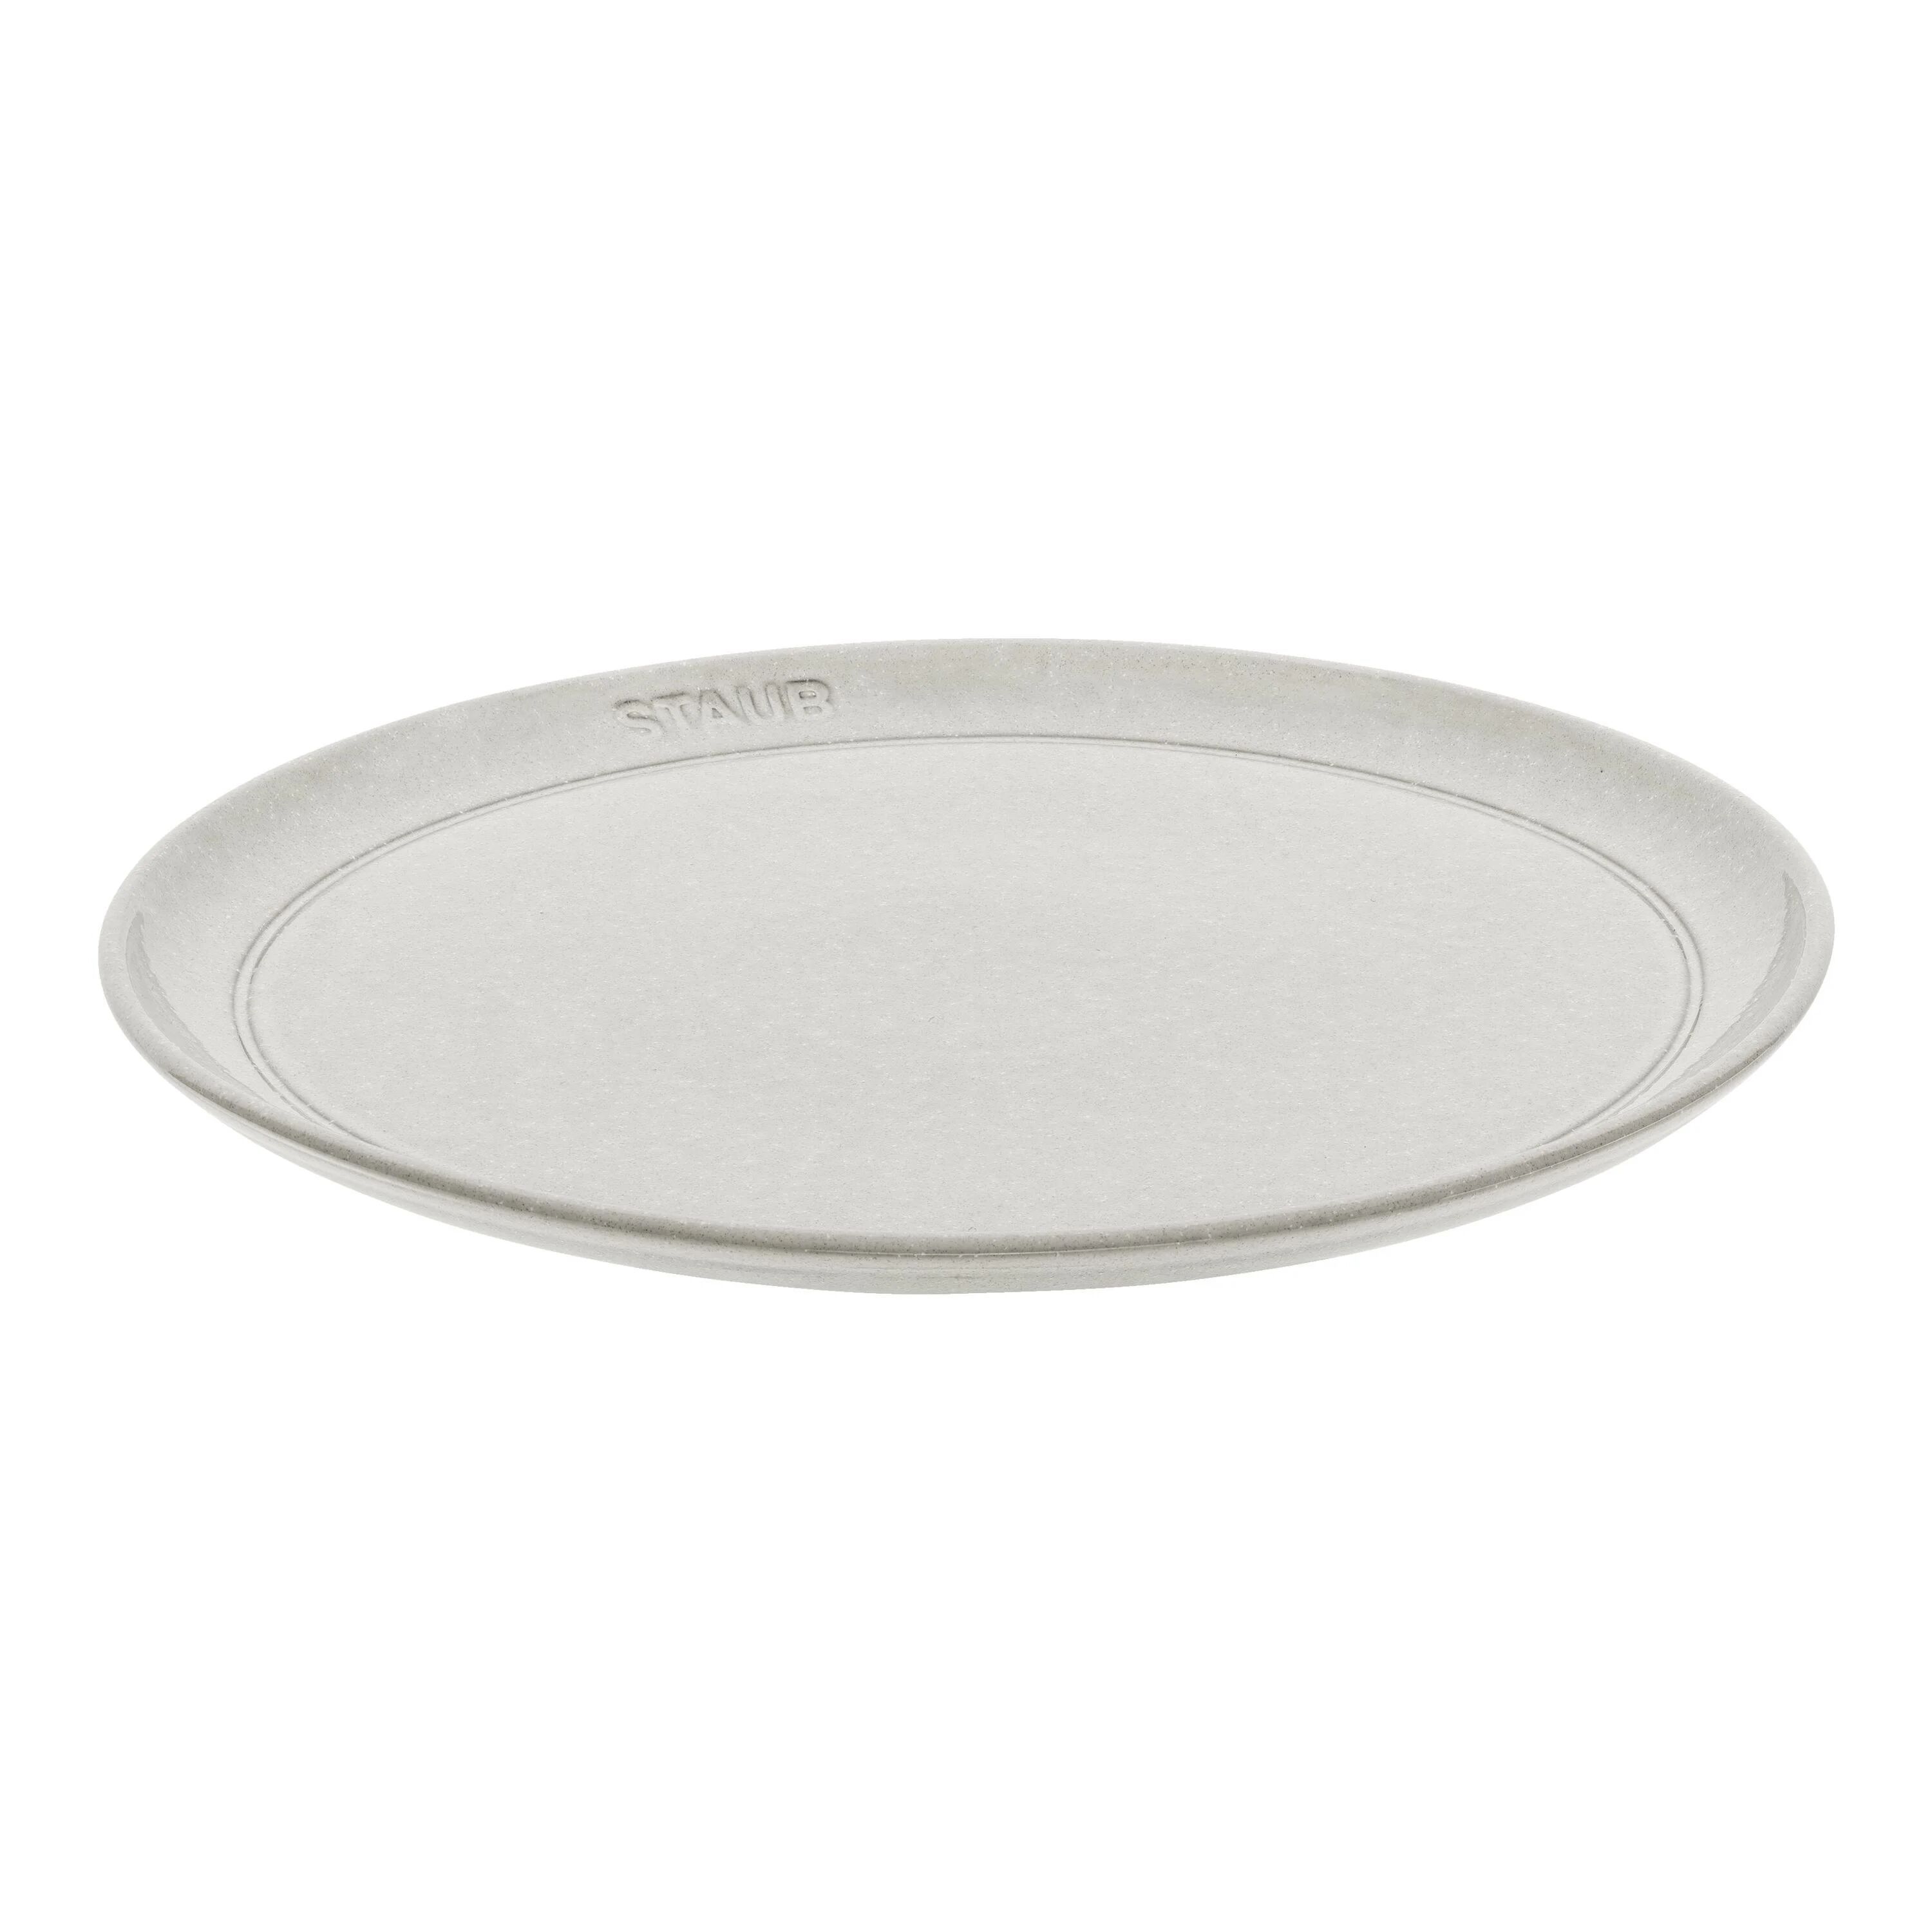 Staub Dining Line Piatto piano rotondo - 26 cm, tartufo bianco